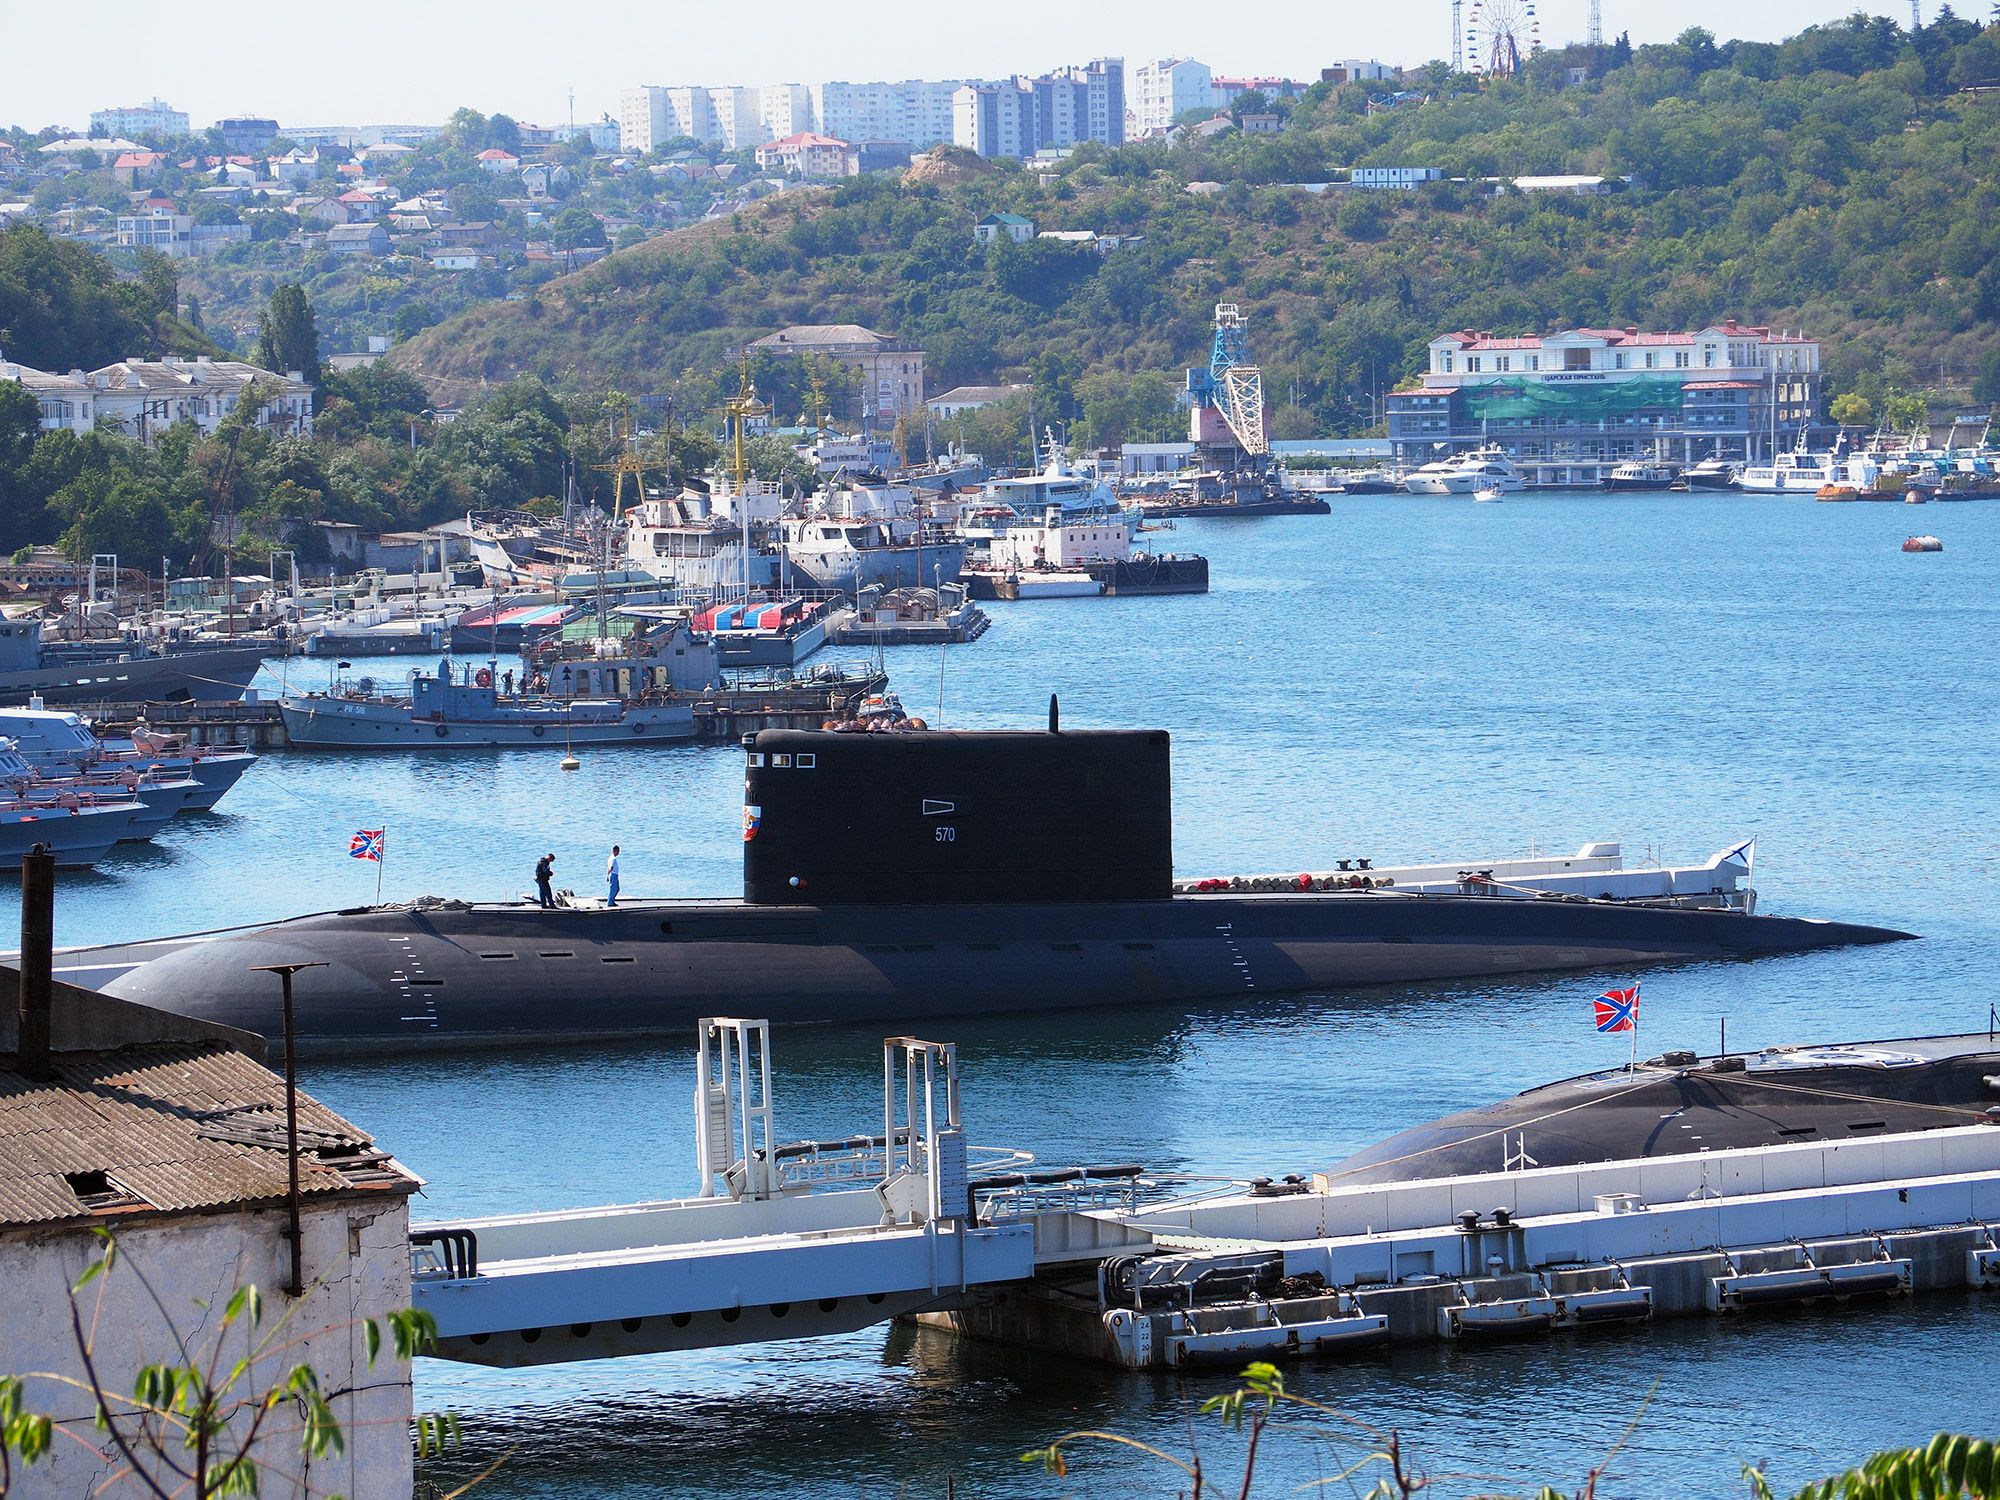 Submarine B-271 Kolpino, Black Sea Fleet (photo by Andrey Brichevsky, 23 August 2019)